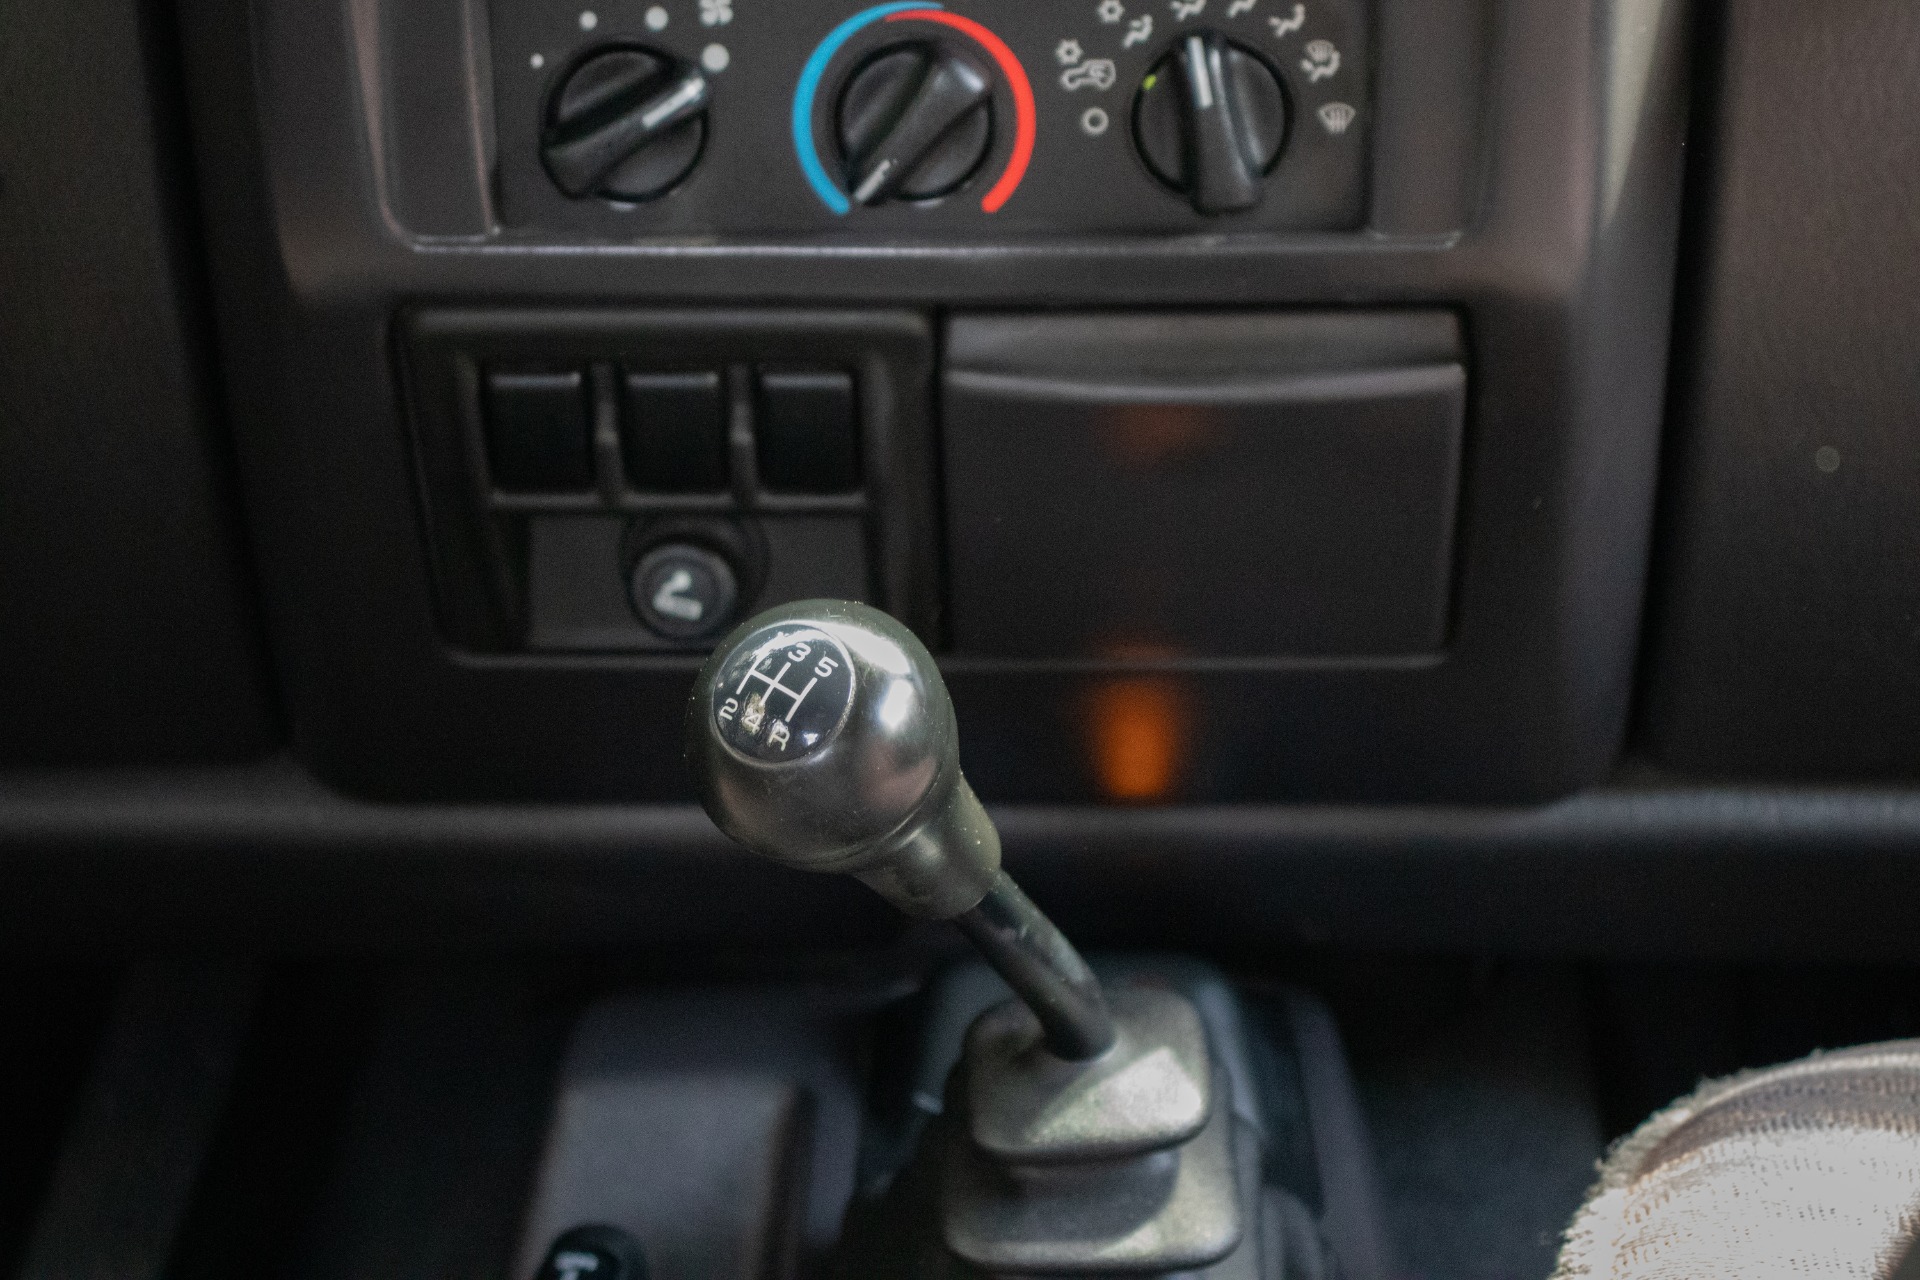 Used-1999-Jeep-Wrangler-SE